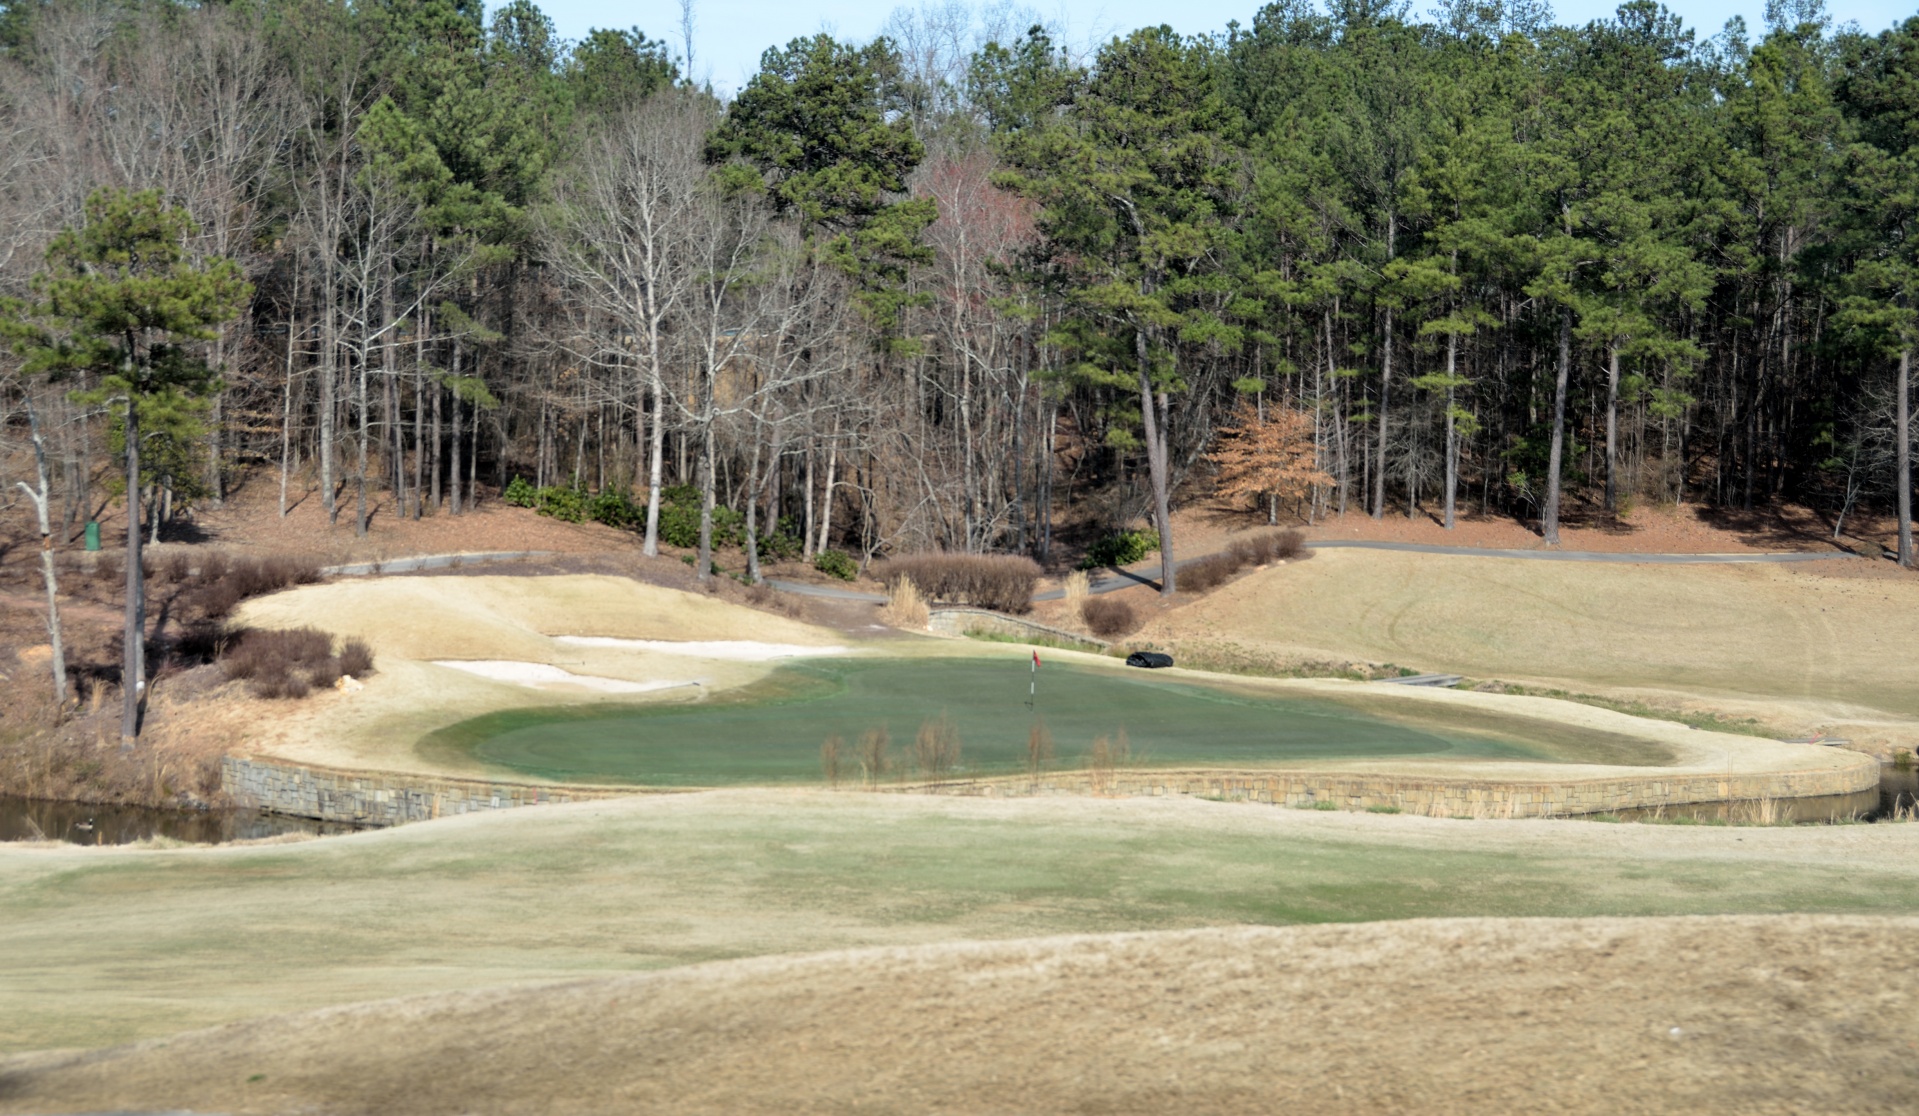 Golf course landscape Georgia, USA.